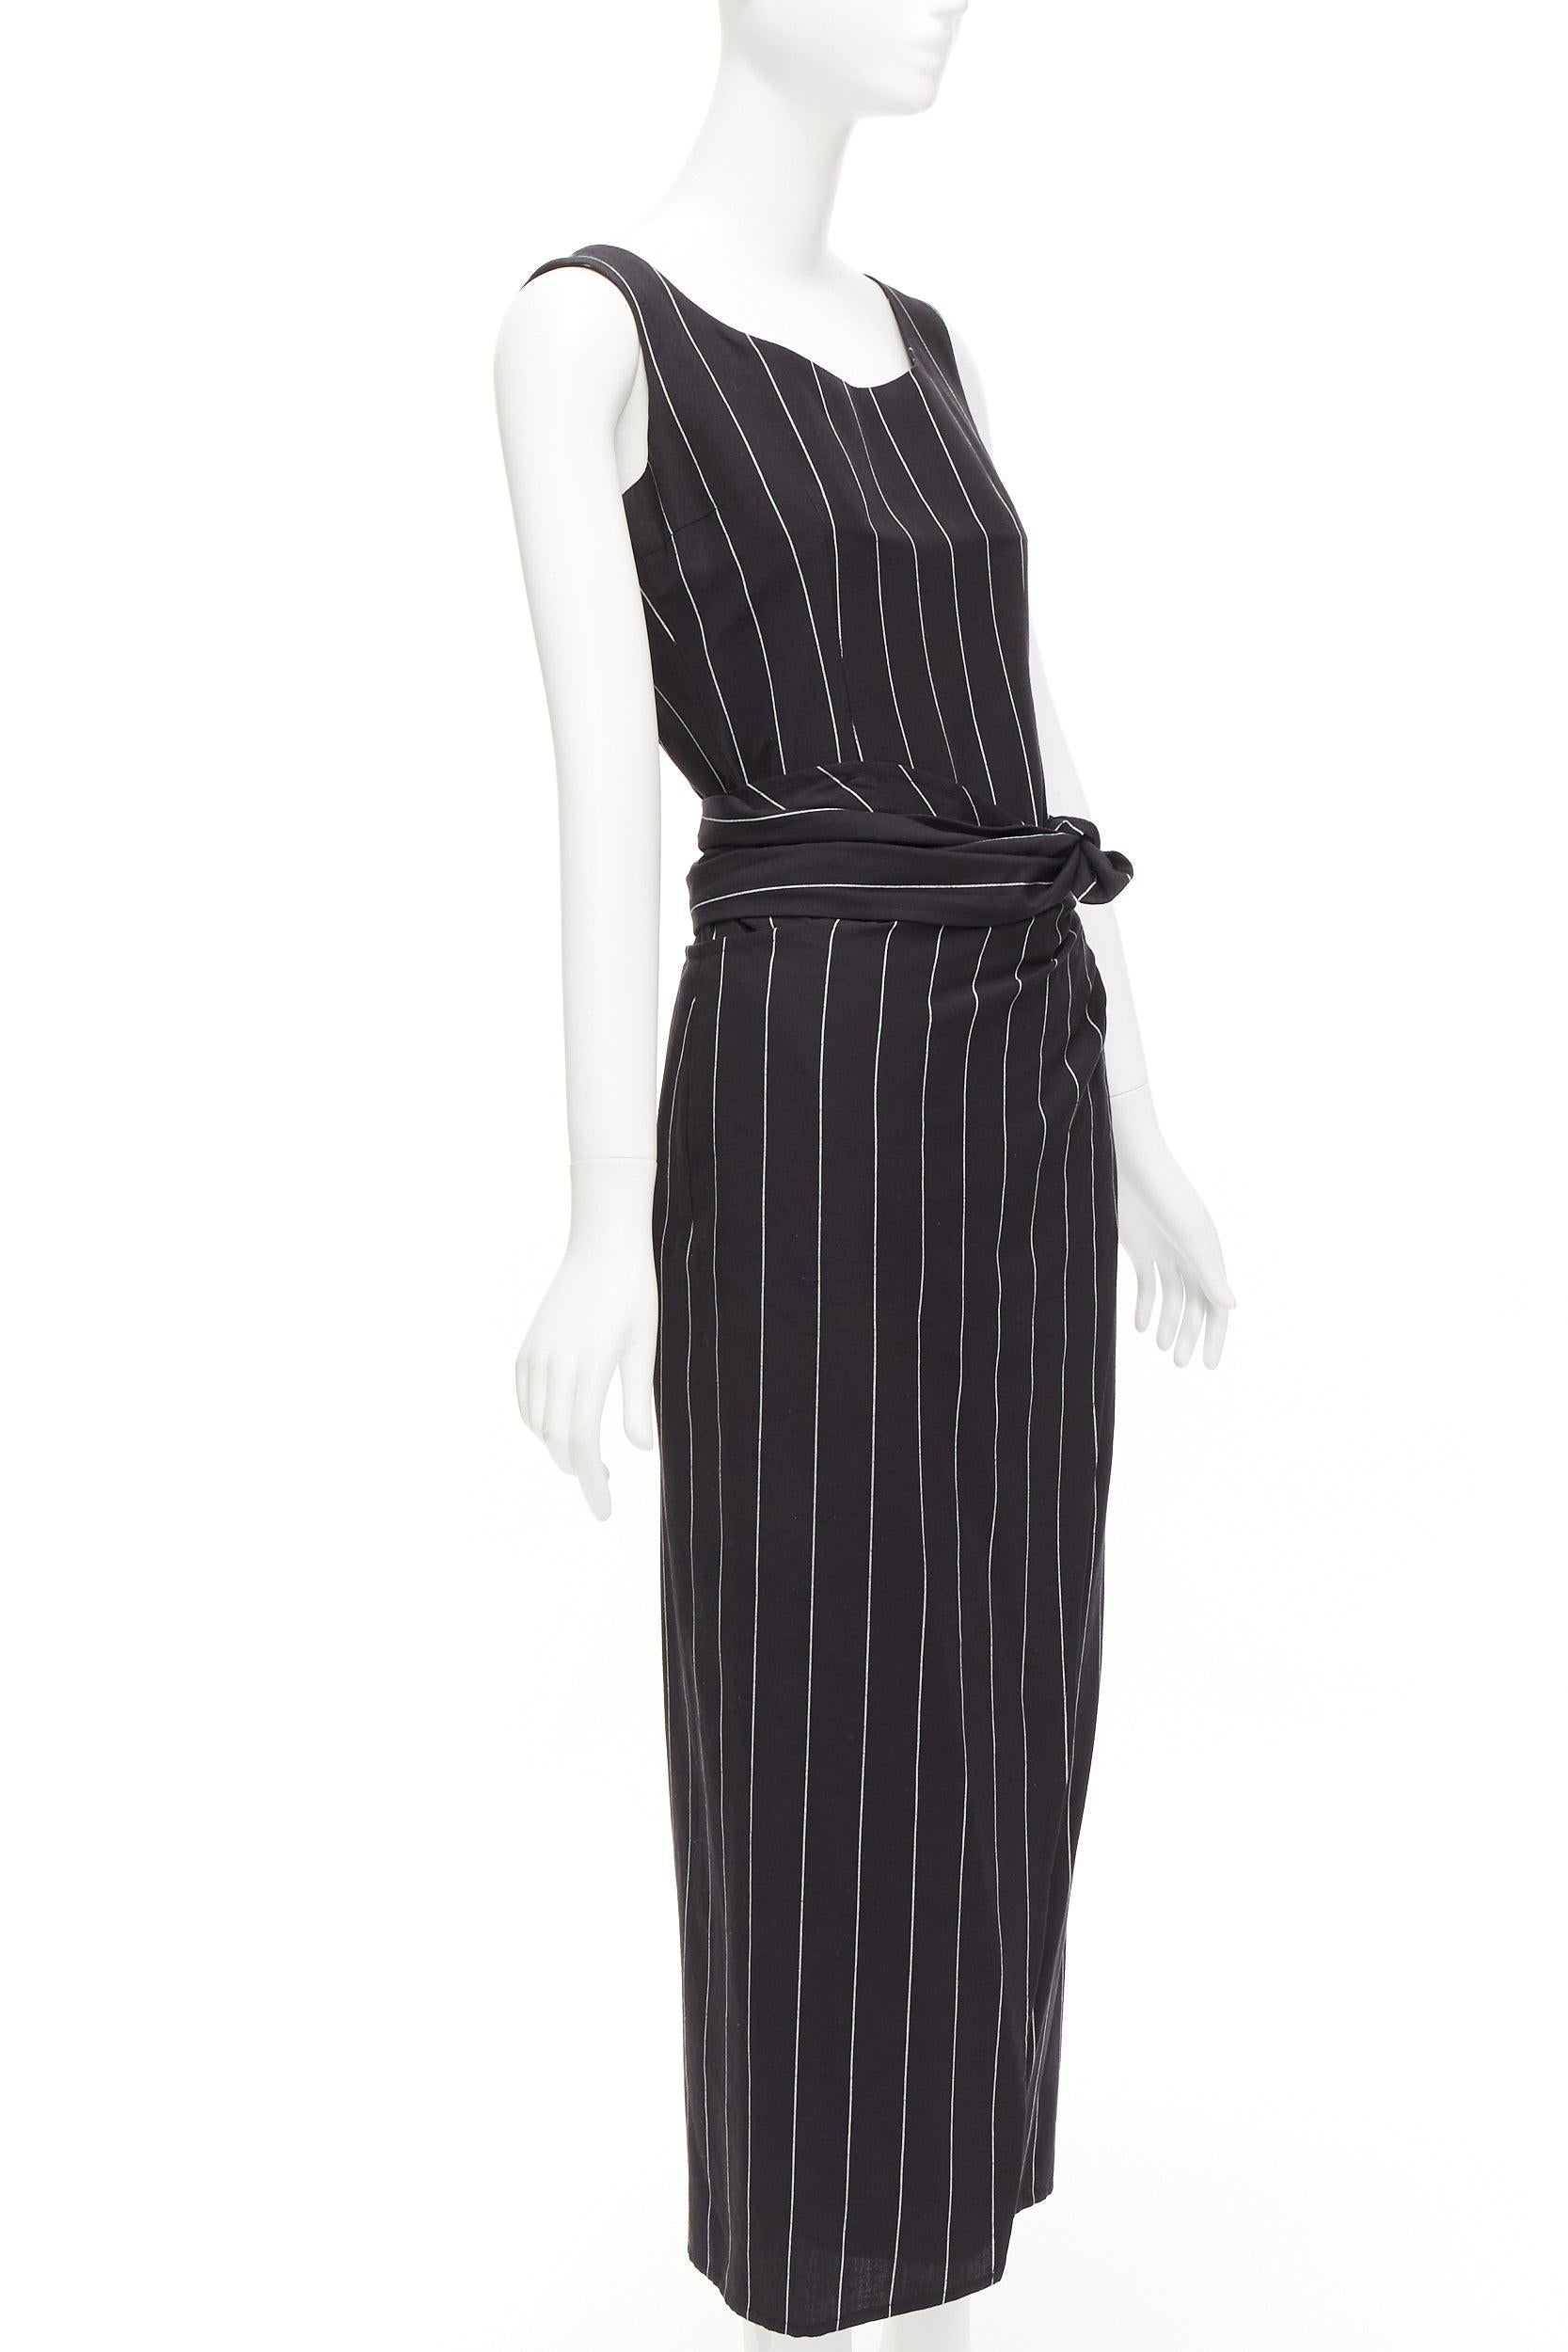 DOLCE GABBANA Vintage 1990 lin noir rayé top wrap skirt set 63cm waist Bon état - En vente à Hong Kong, NT